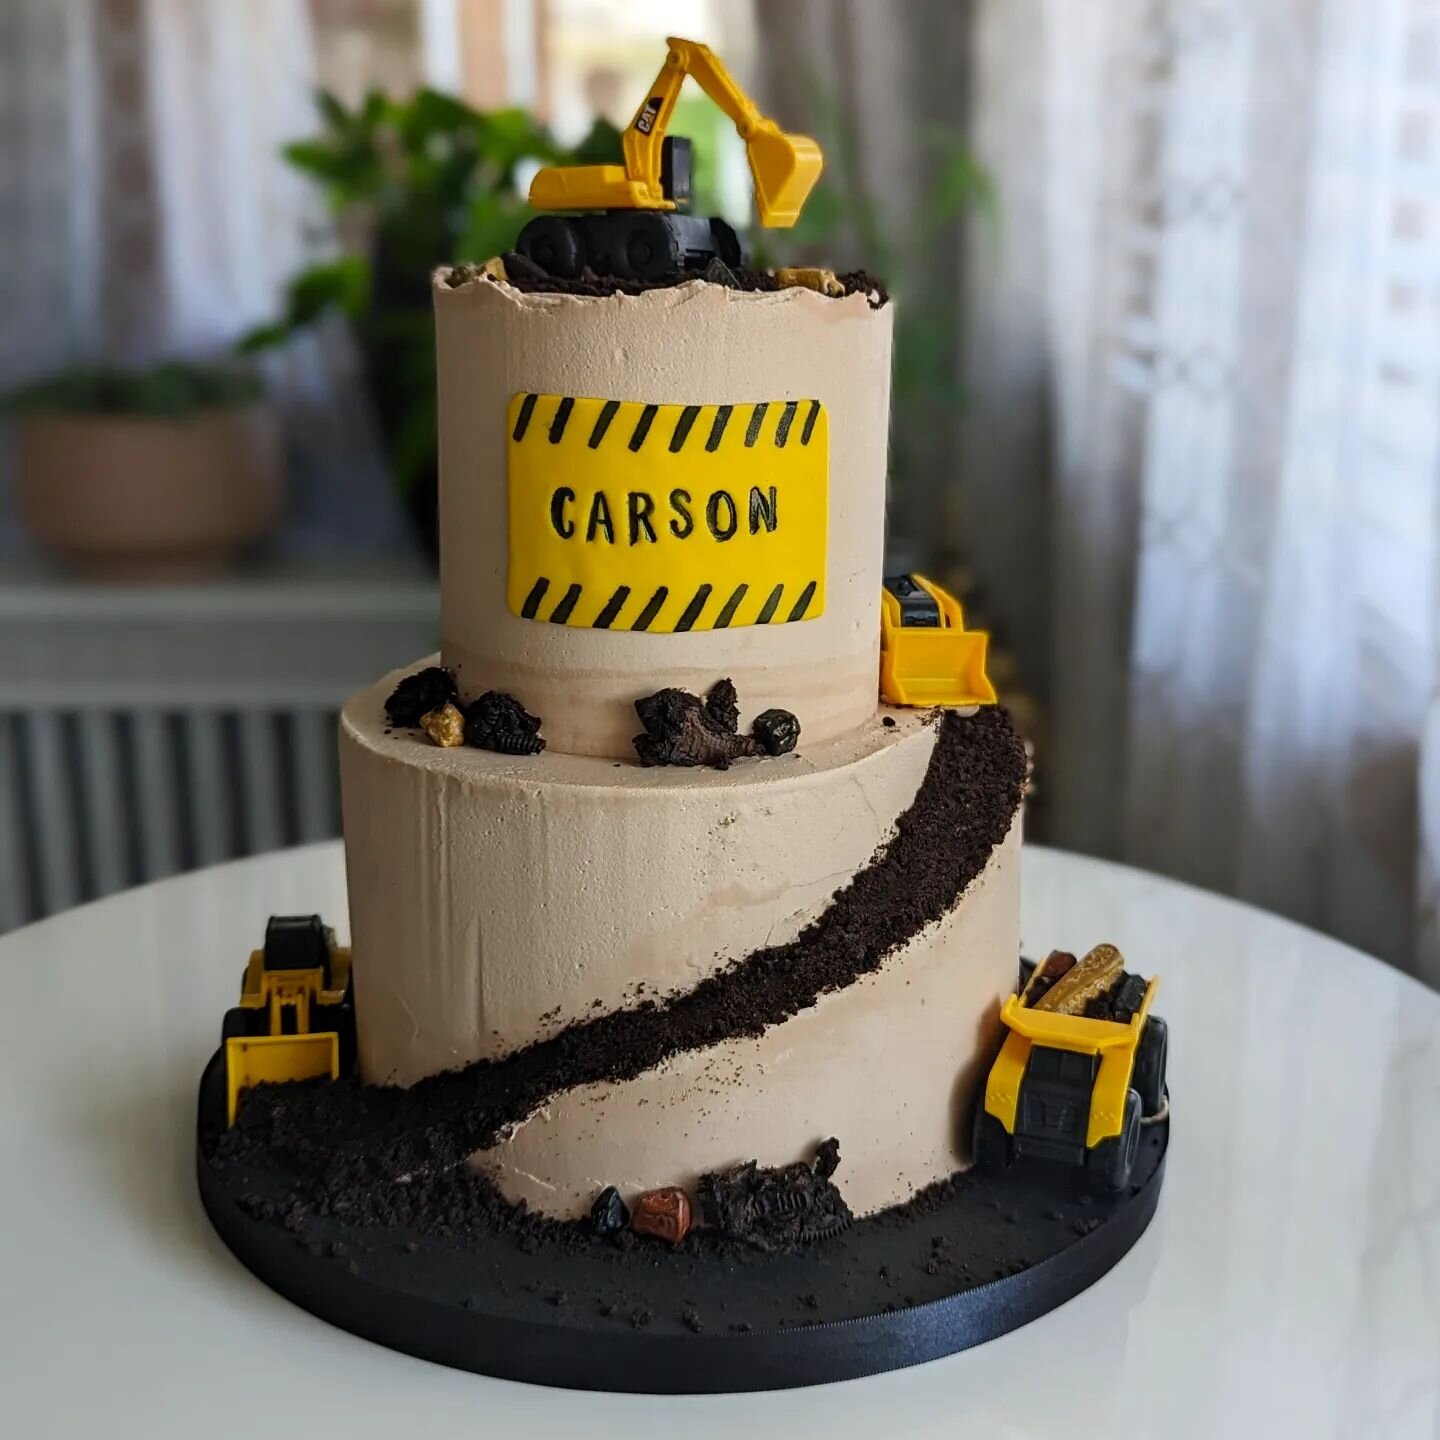 🚧 CAUTION - PARTY ZONE AHEAD 🚧

Super fun construction theme birthday cake!

Carson, I hope your birthday was loads of fun ☺️

Flavor : Confetti

#homespunsweets #birthdaycake #buttercreamcake #constructioncake #constructionbirthday #boyscake #girl